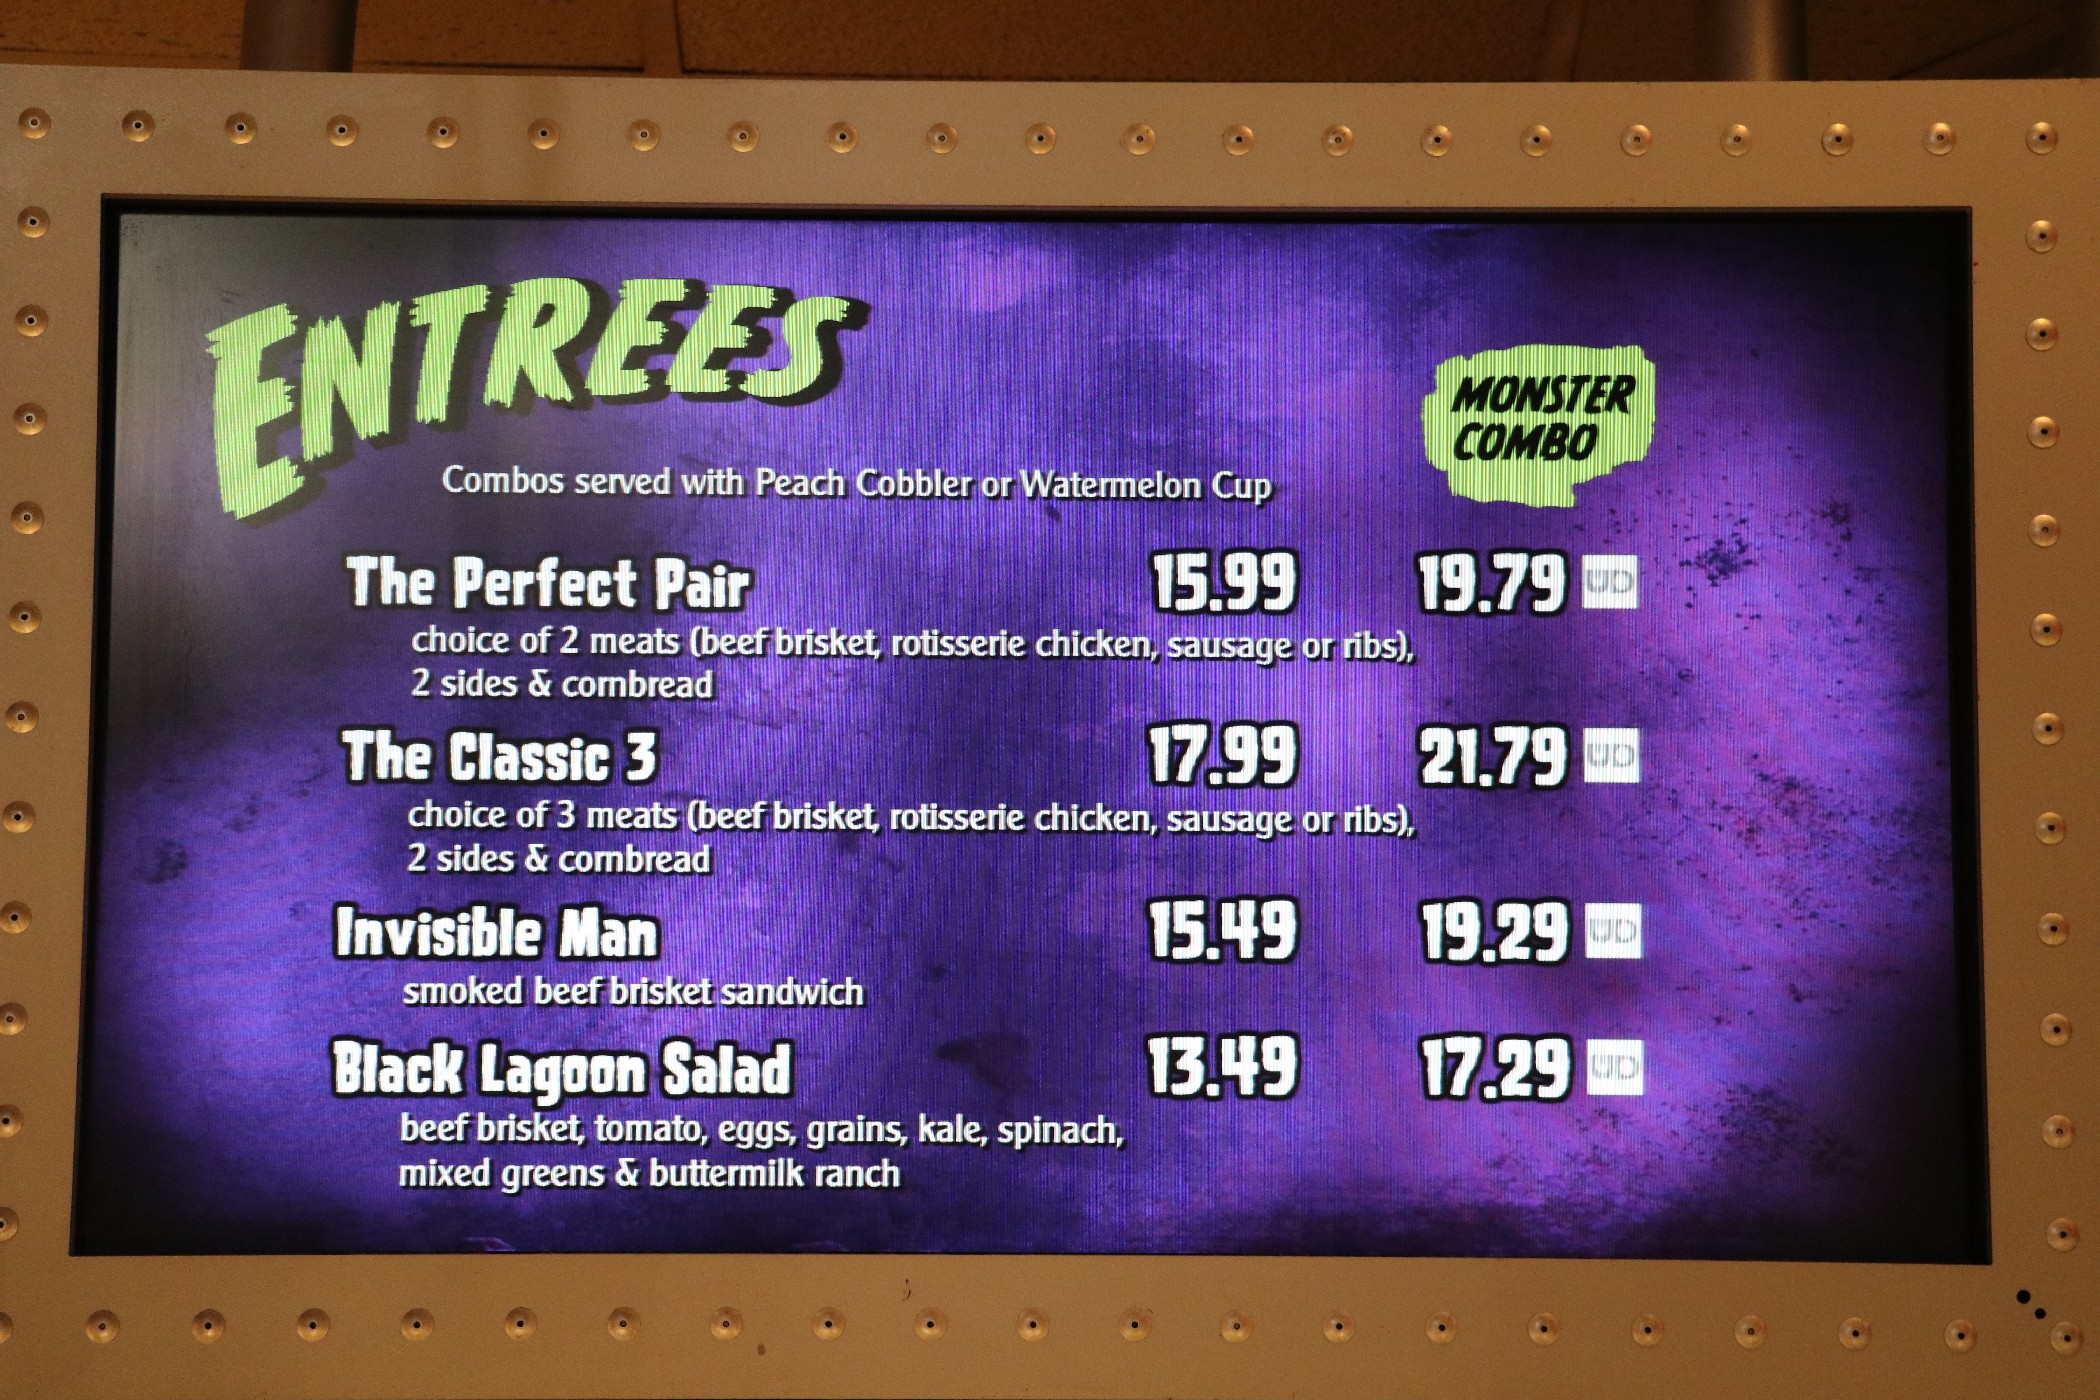 Universal Monsters Cafe at Universal Studios Florida gets updated menu